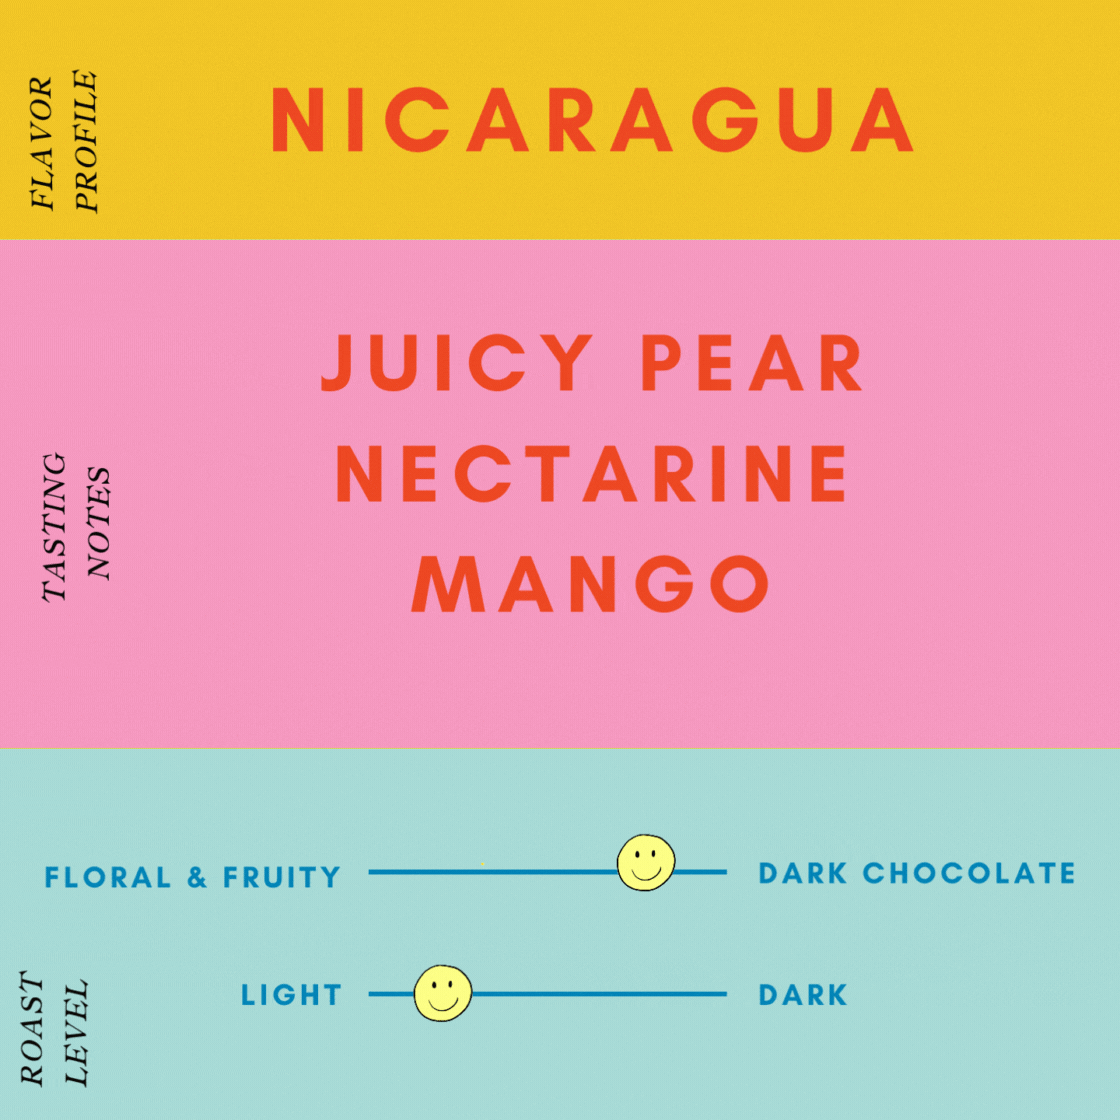 Nicaragua: Single Origin Coffee